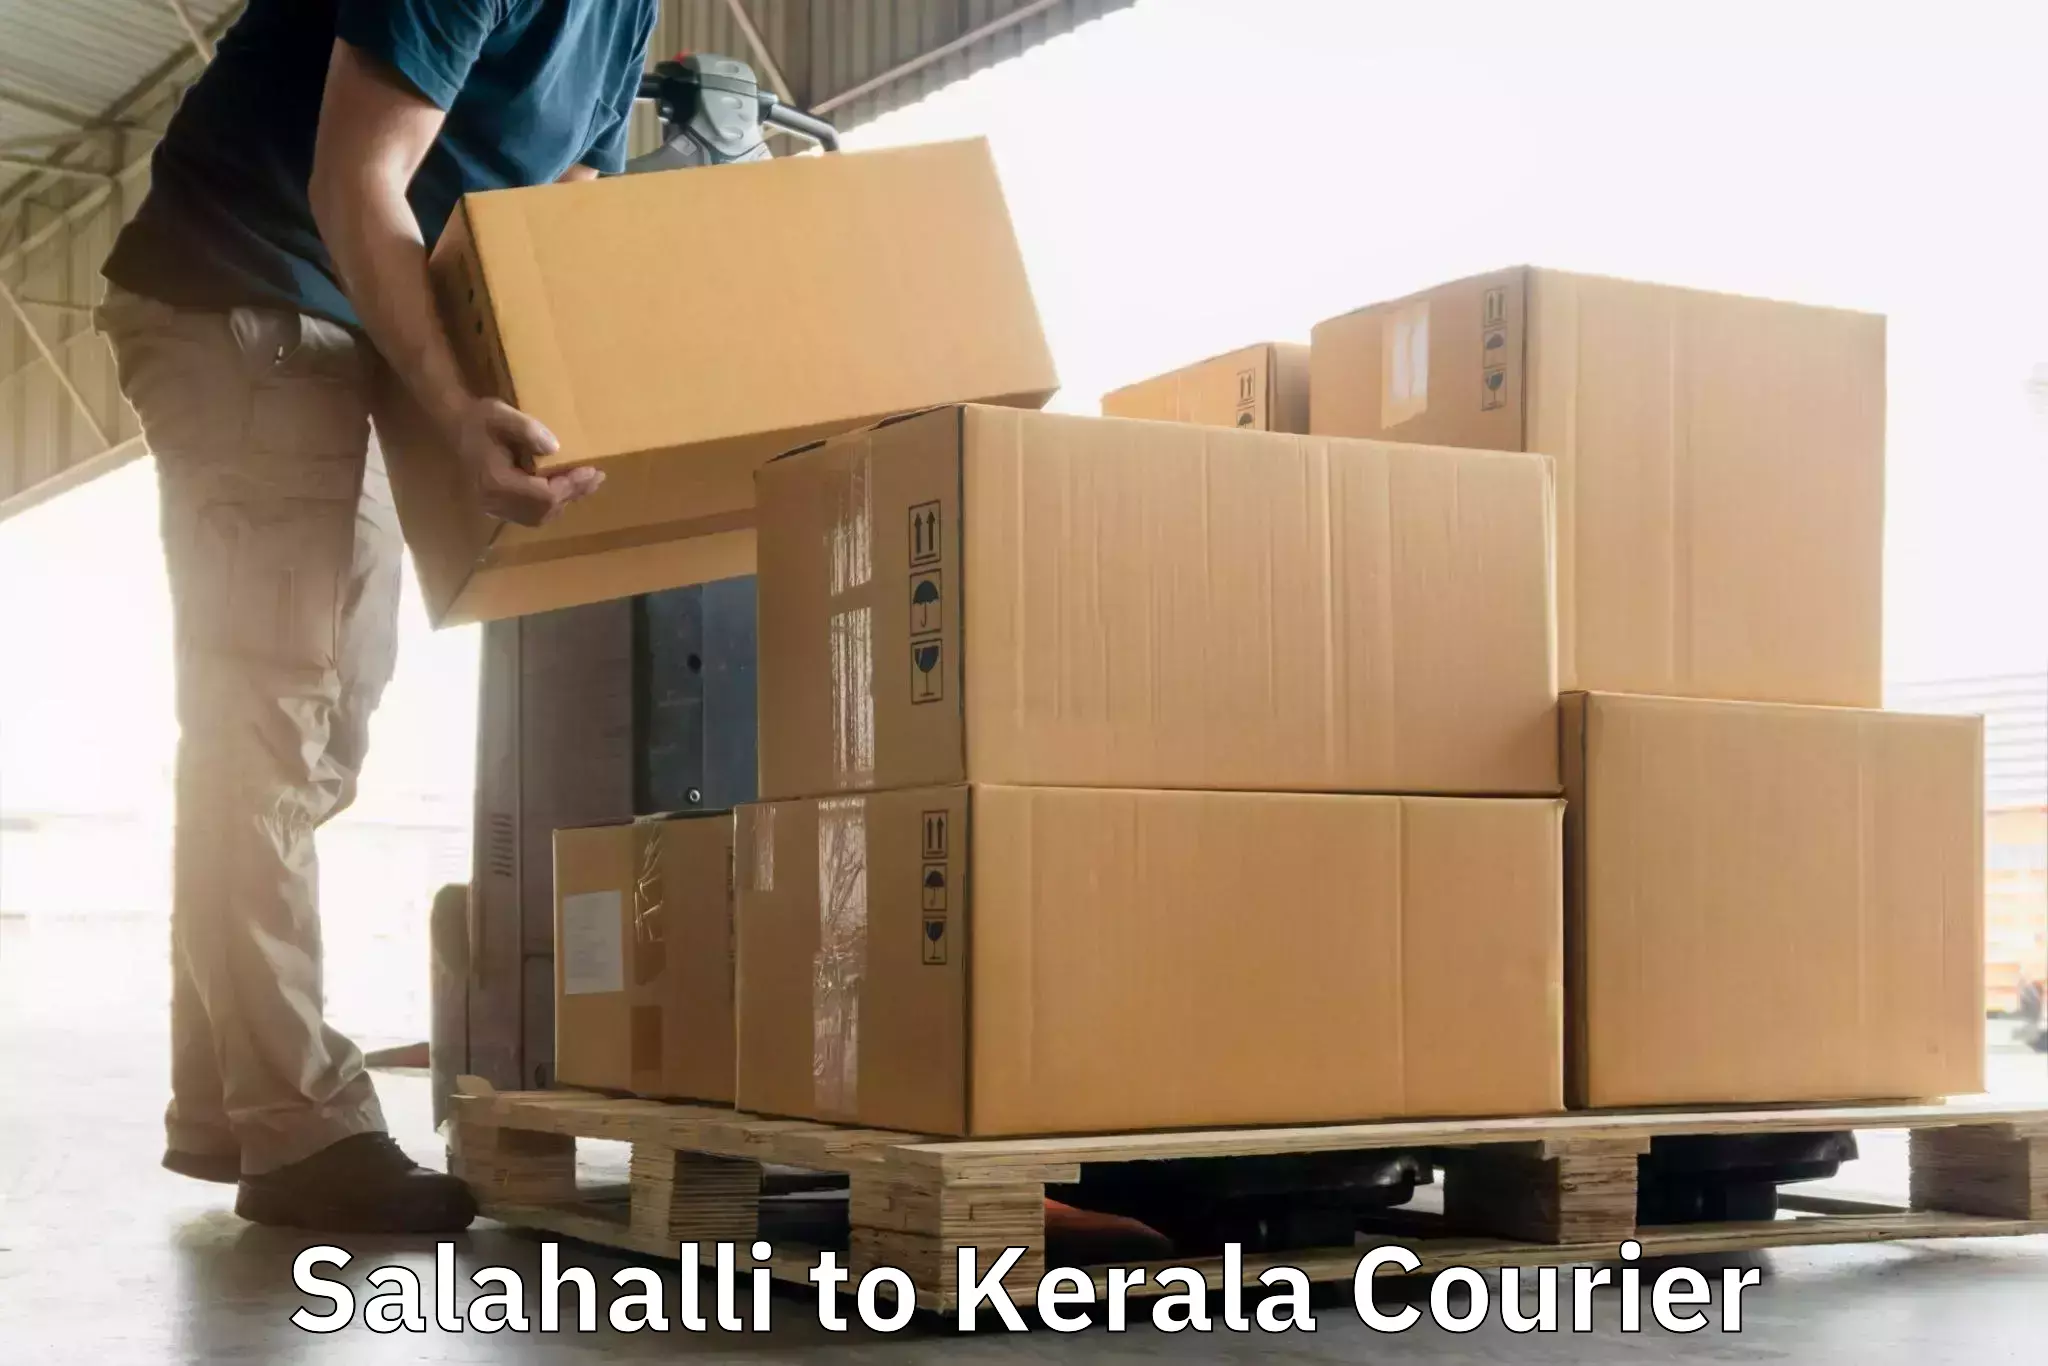 High-capacity parcel service Salahalli to Kallikkad